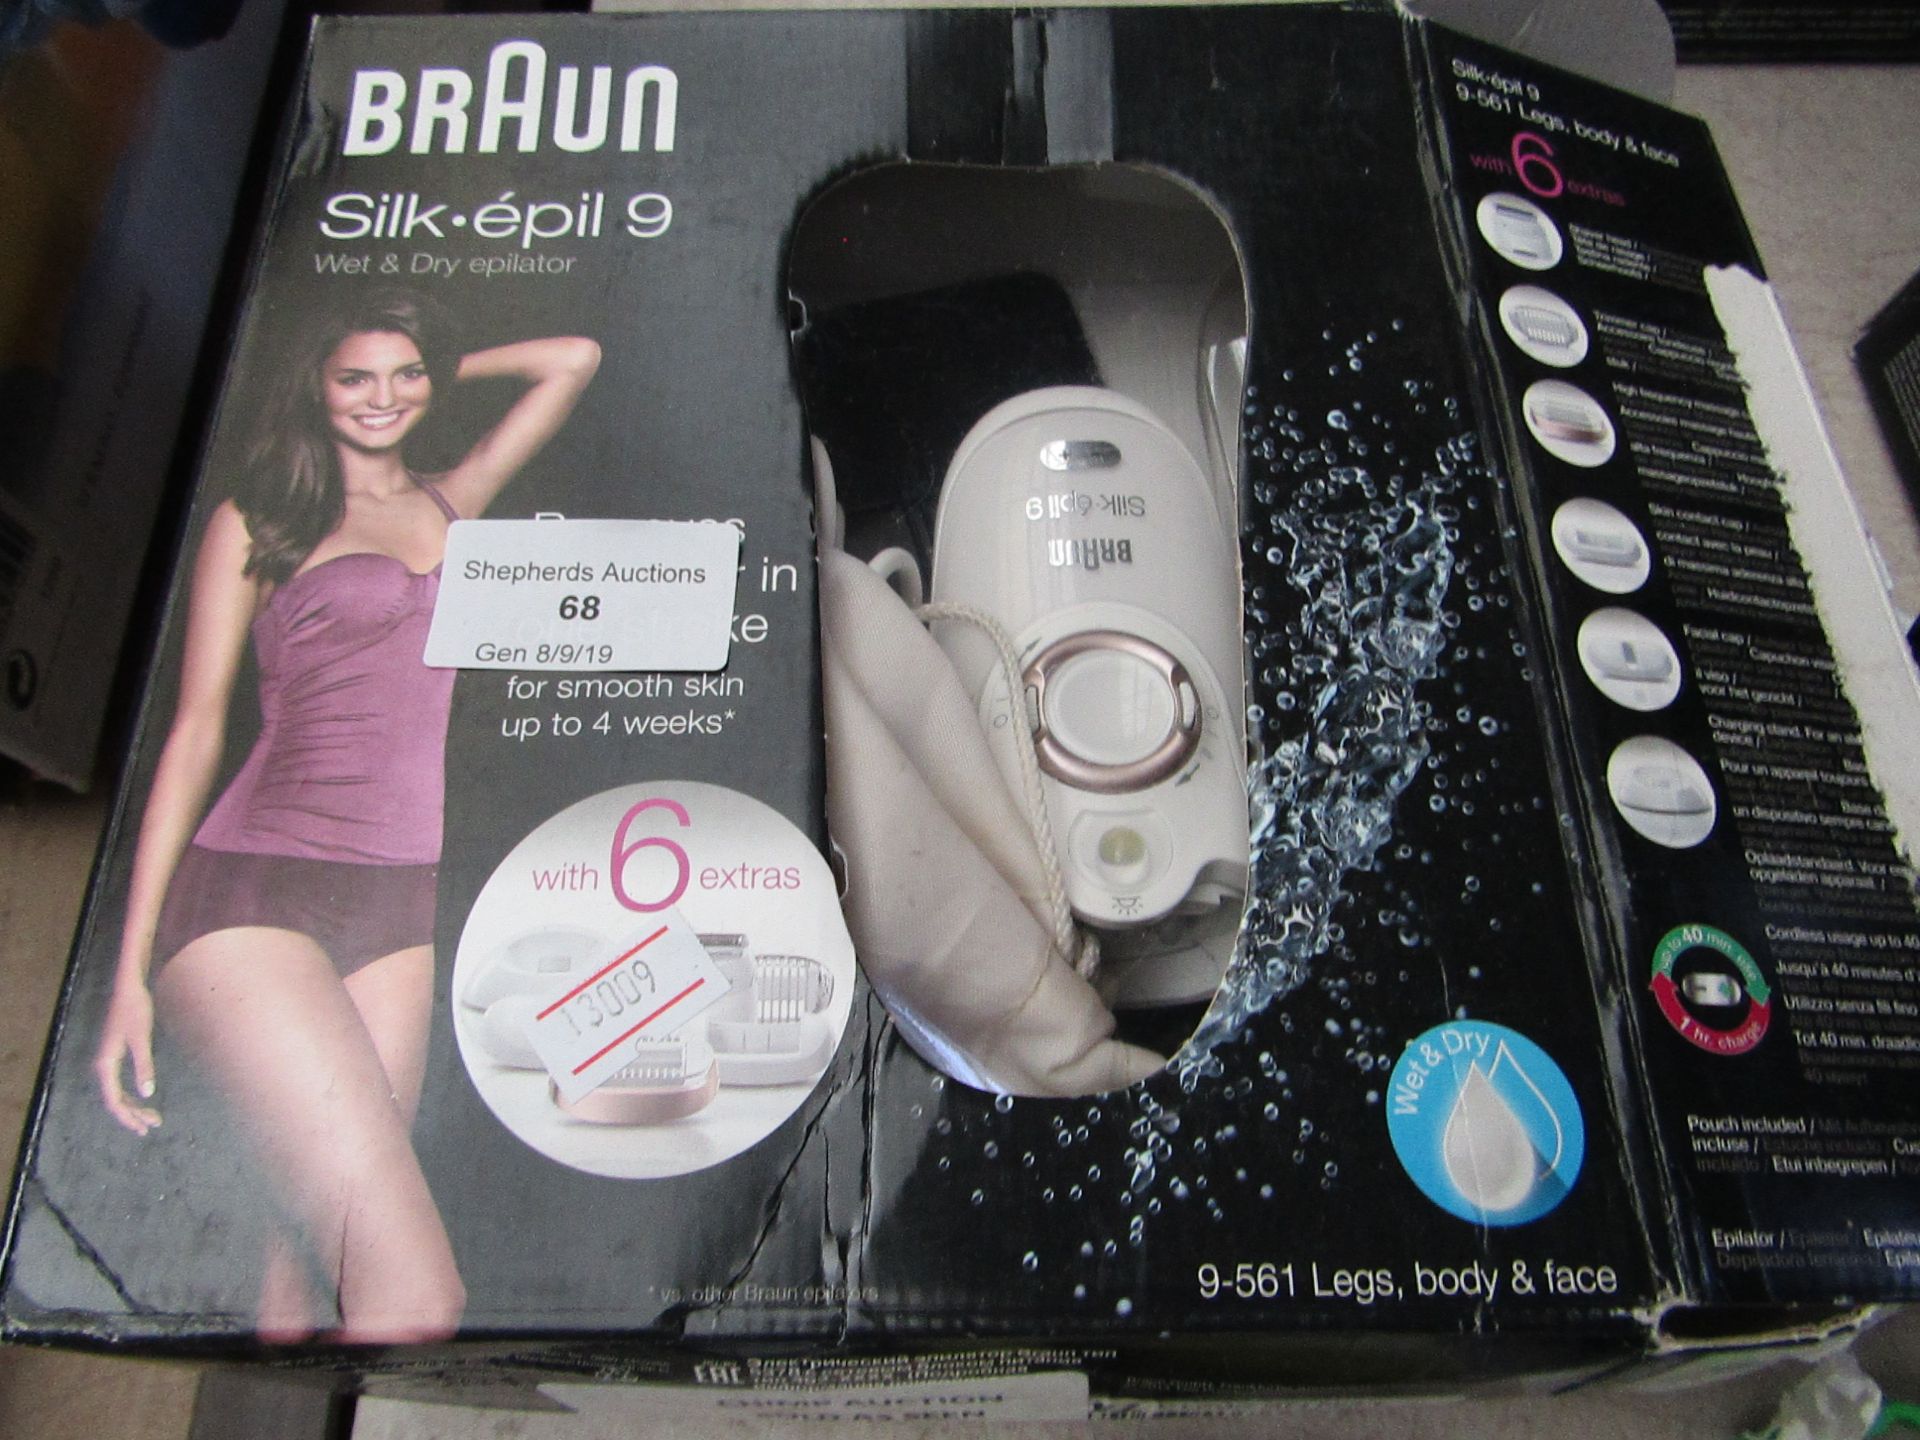 Braun Silk Epil 9 Wet & Dry Epliator packaged unchecked